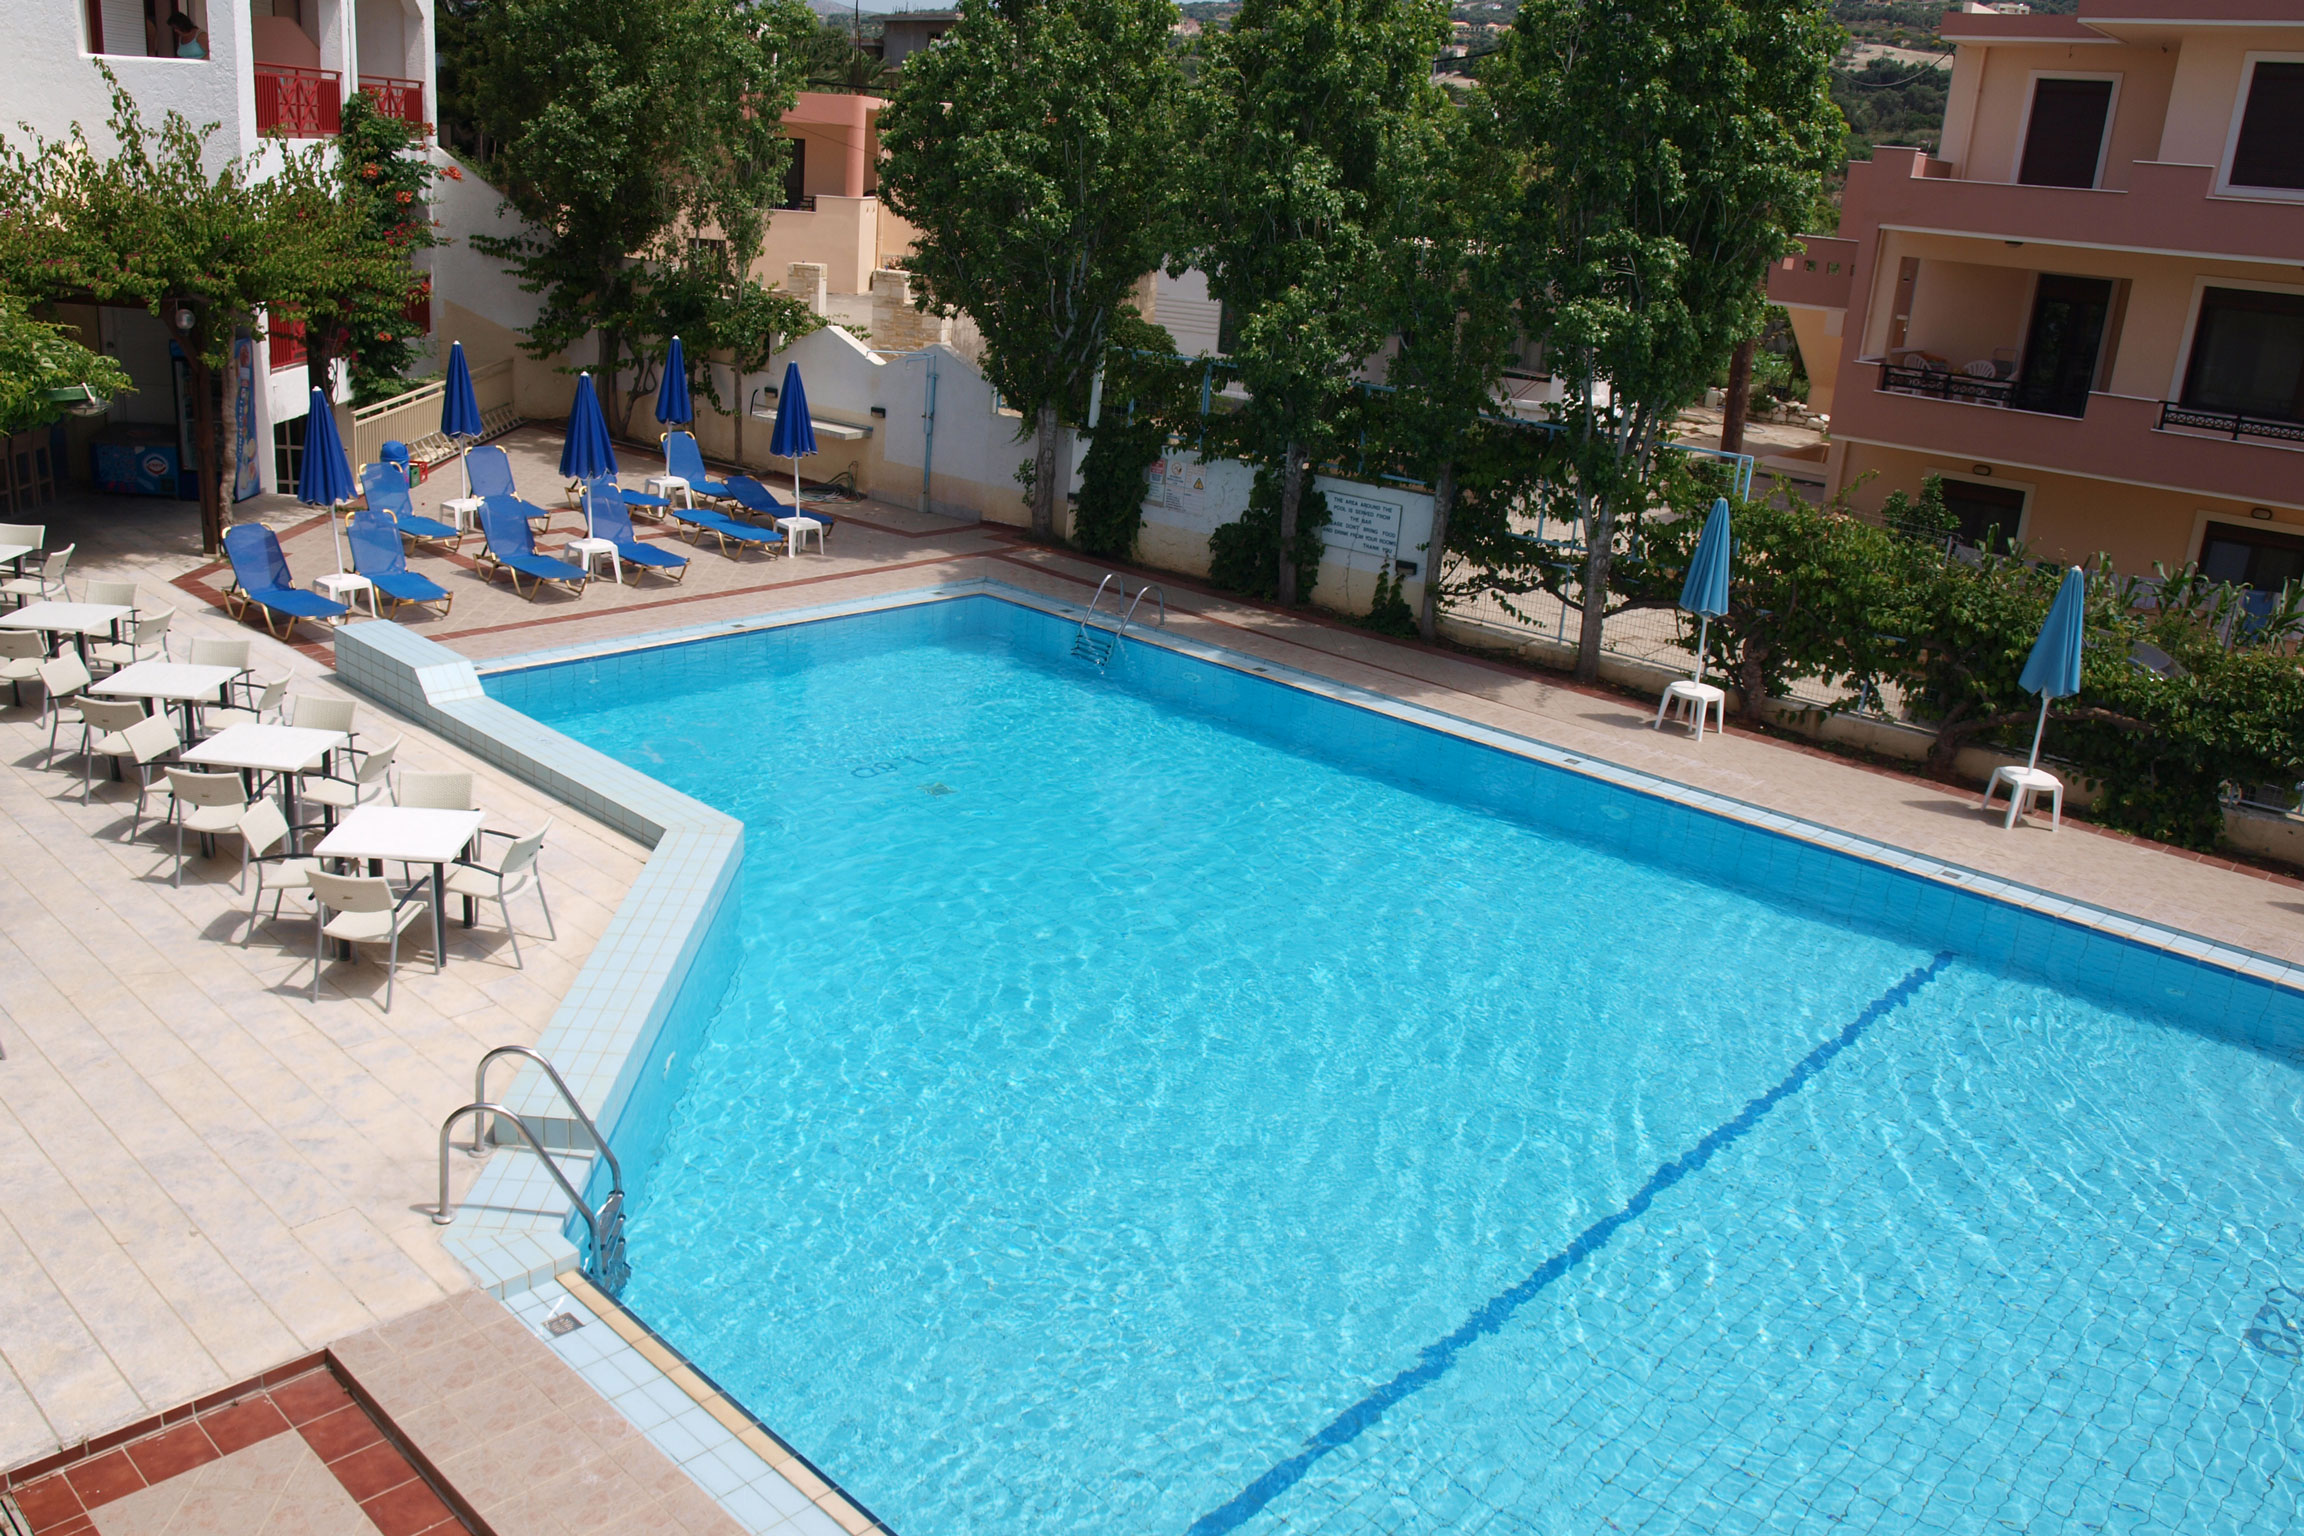 Apollon Hotel Apartments - Ρέθυμνο, Κρήτη ✦ 3 Ημέρες